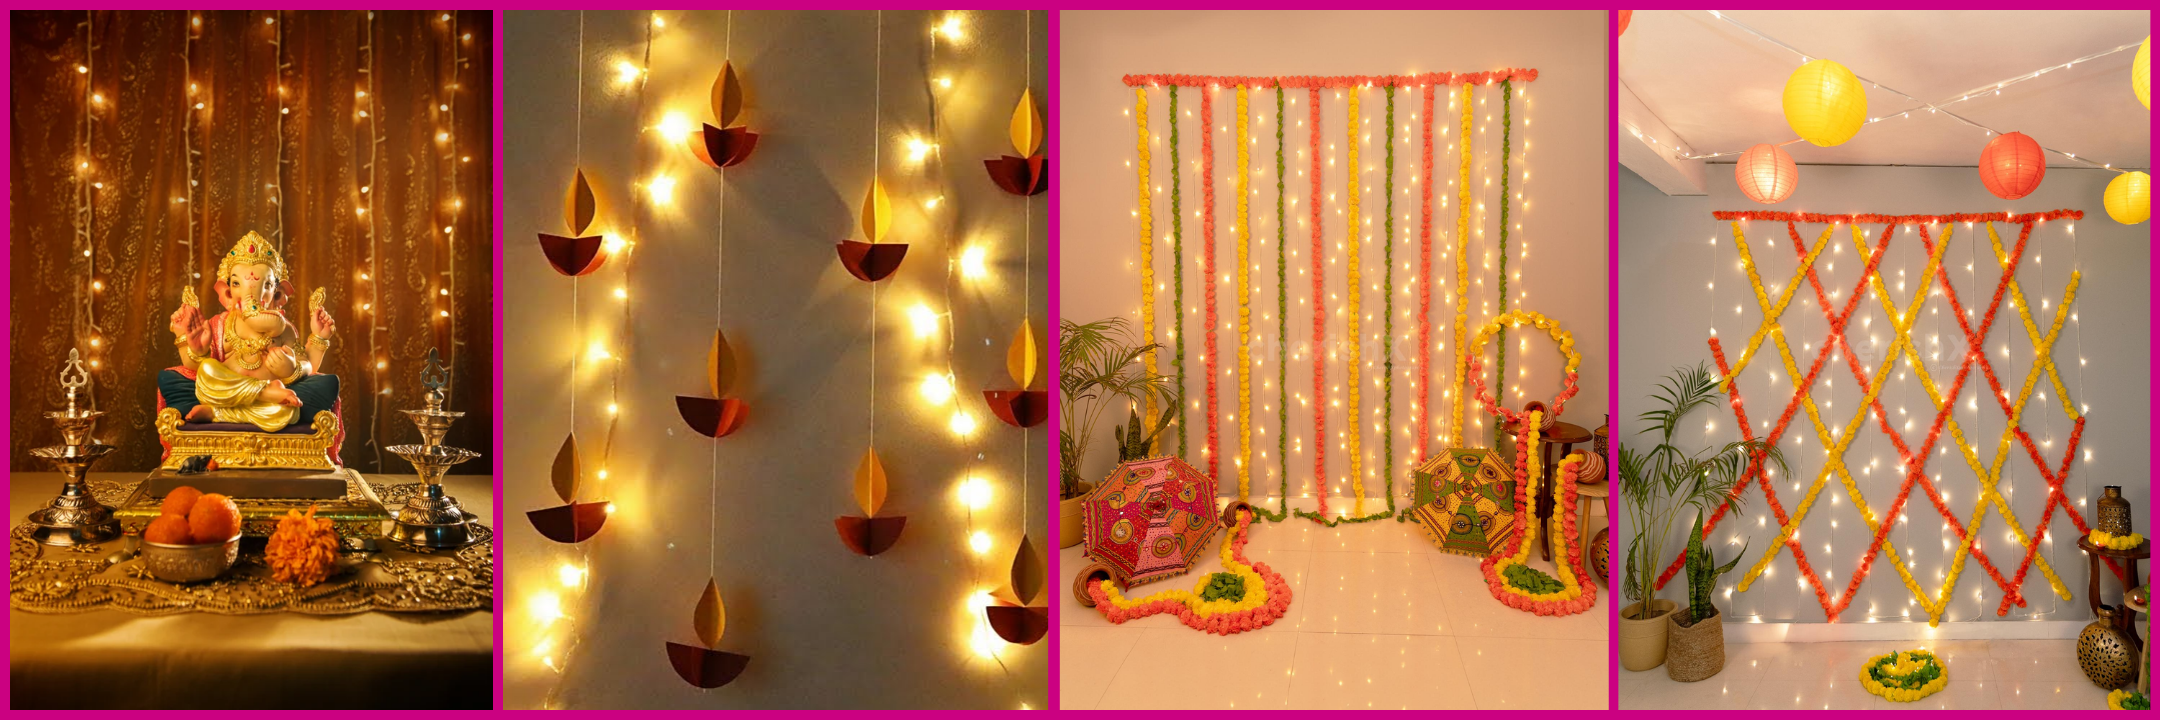 Cork Diwali LED Lights for Home decoration on Diwali, Dashera, birthday